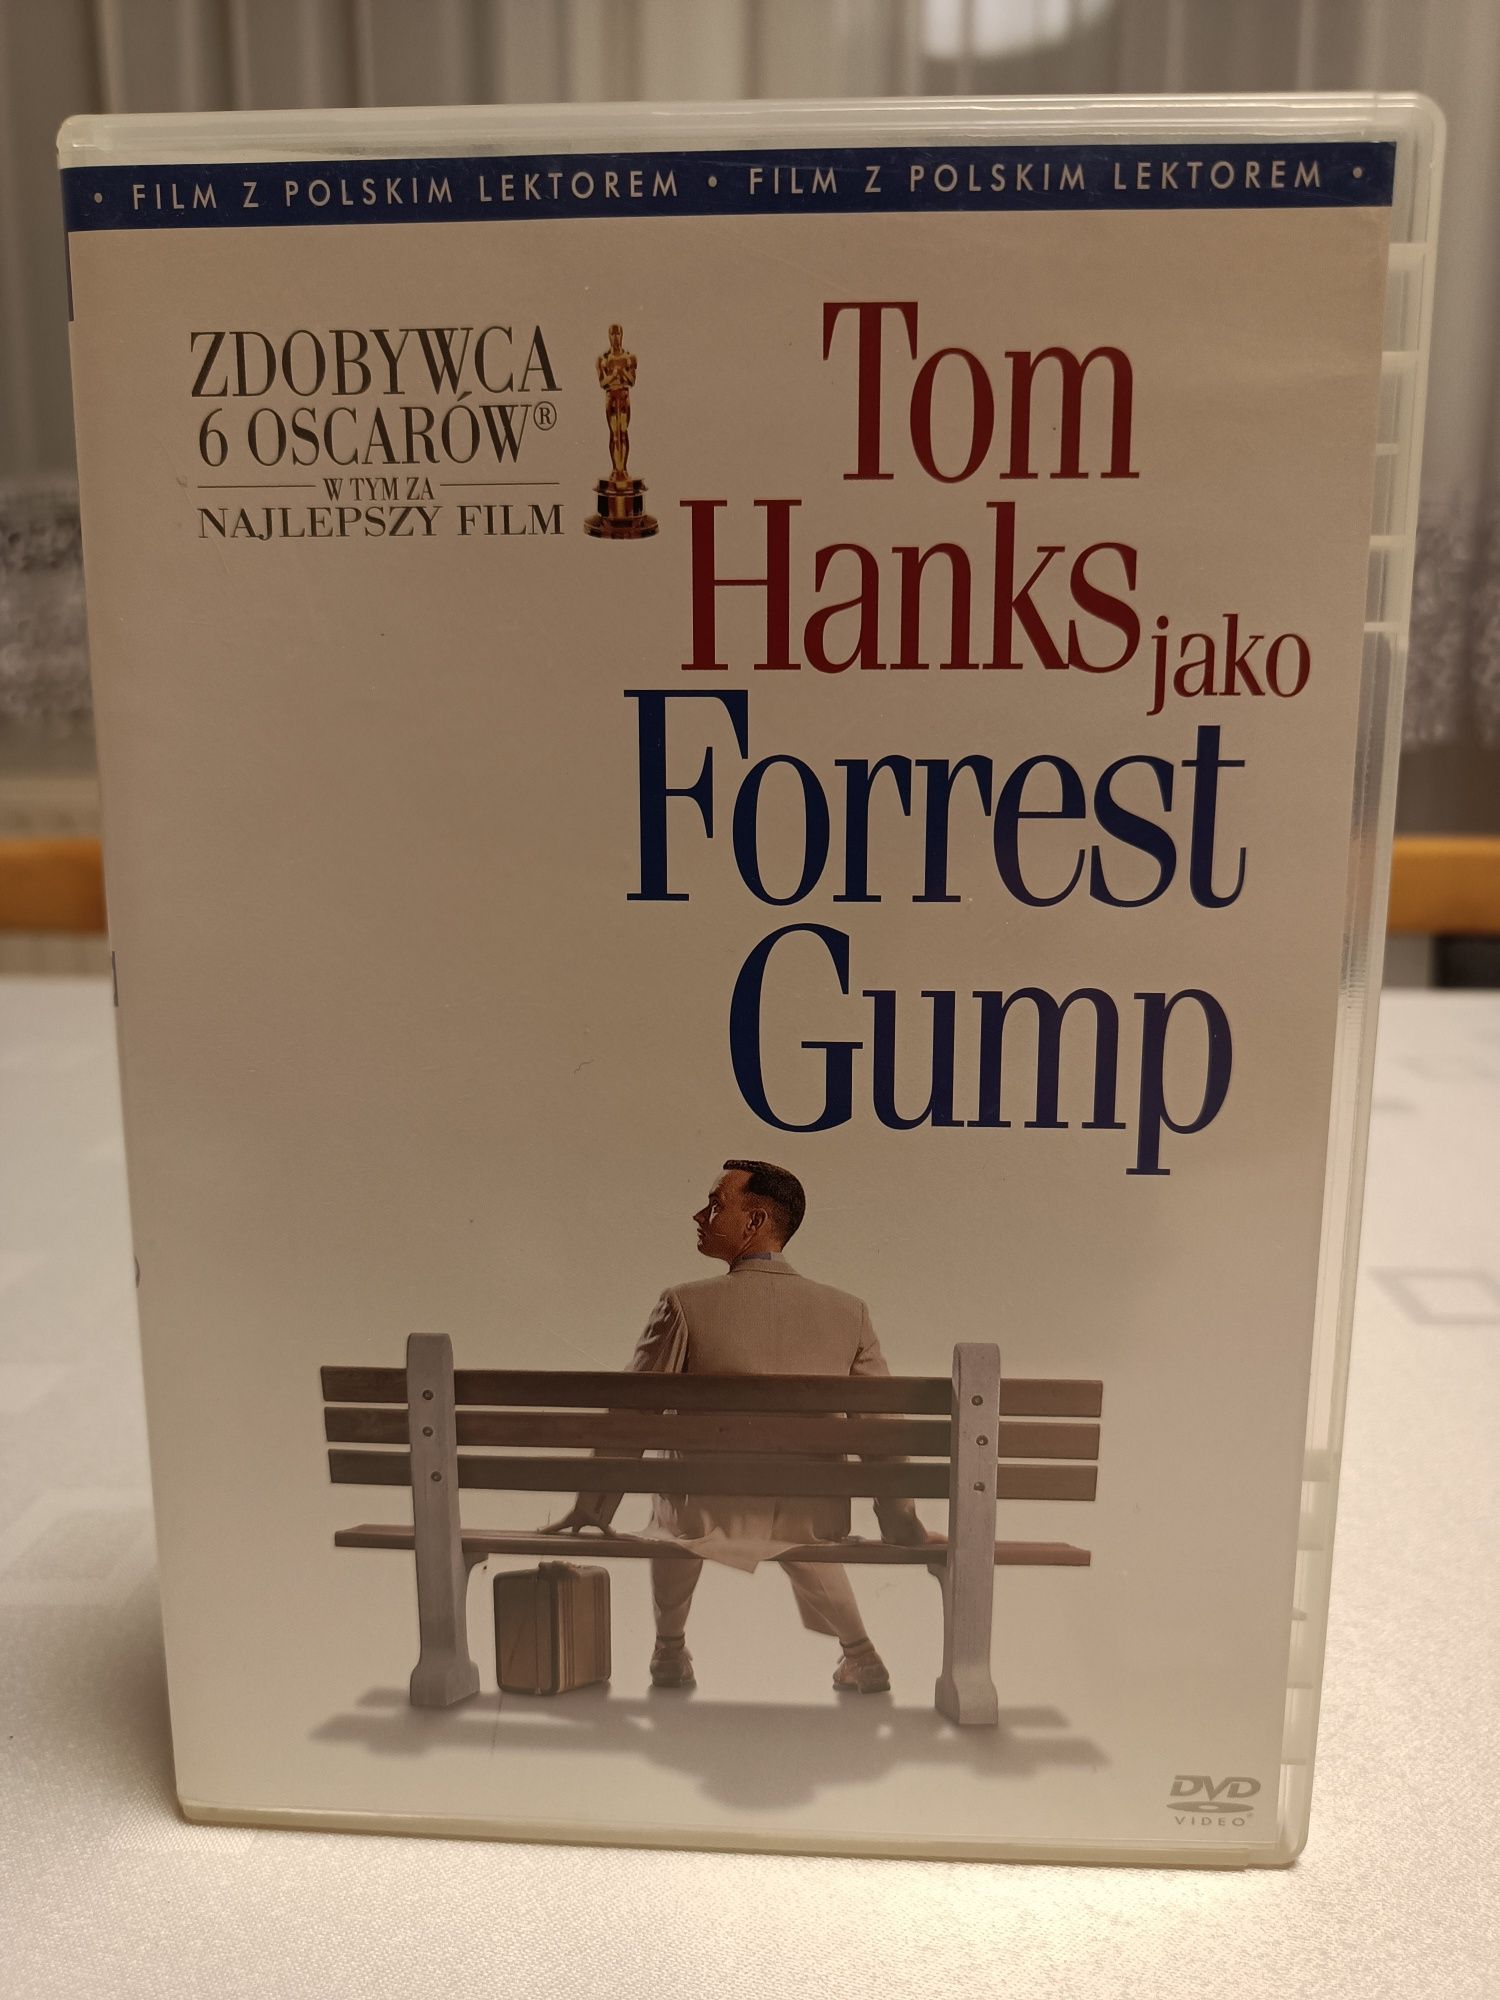 Forrest Gump - film DVD polski lektor